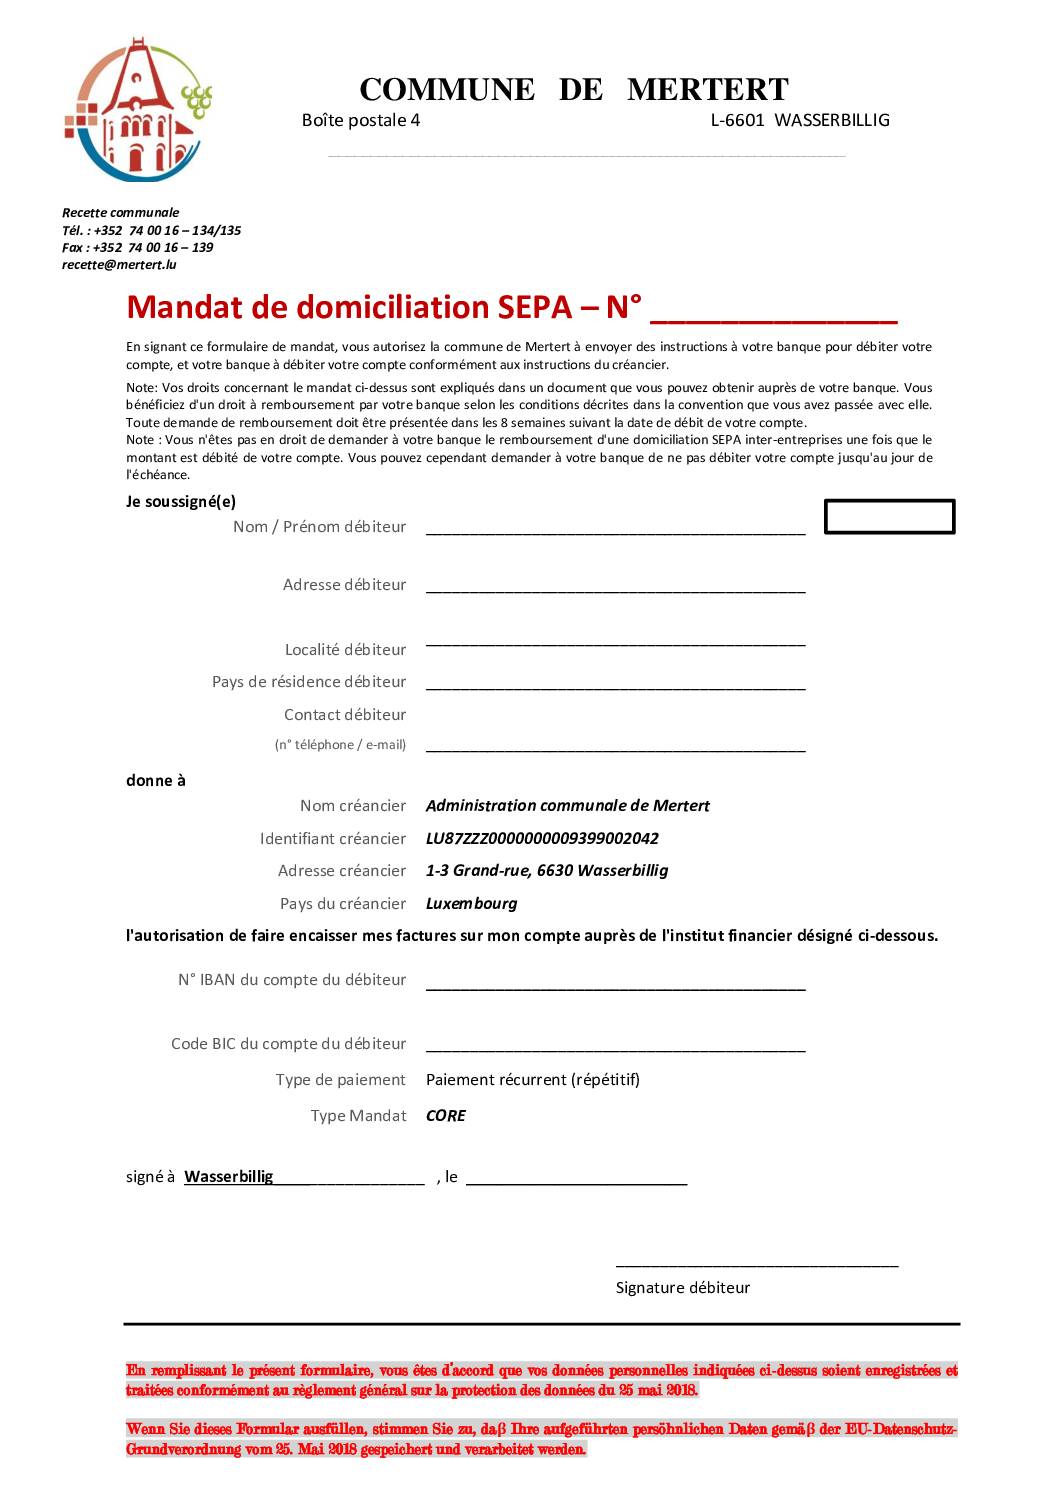 Mandat de Domiciliation SEPA_CORE_blank